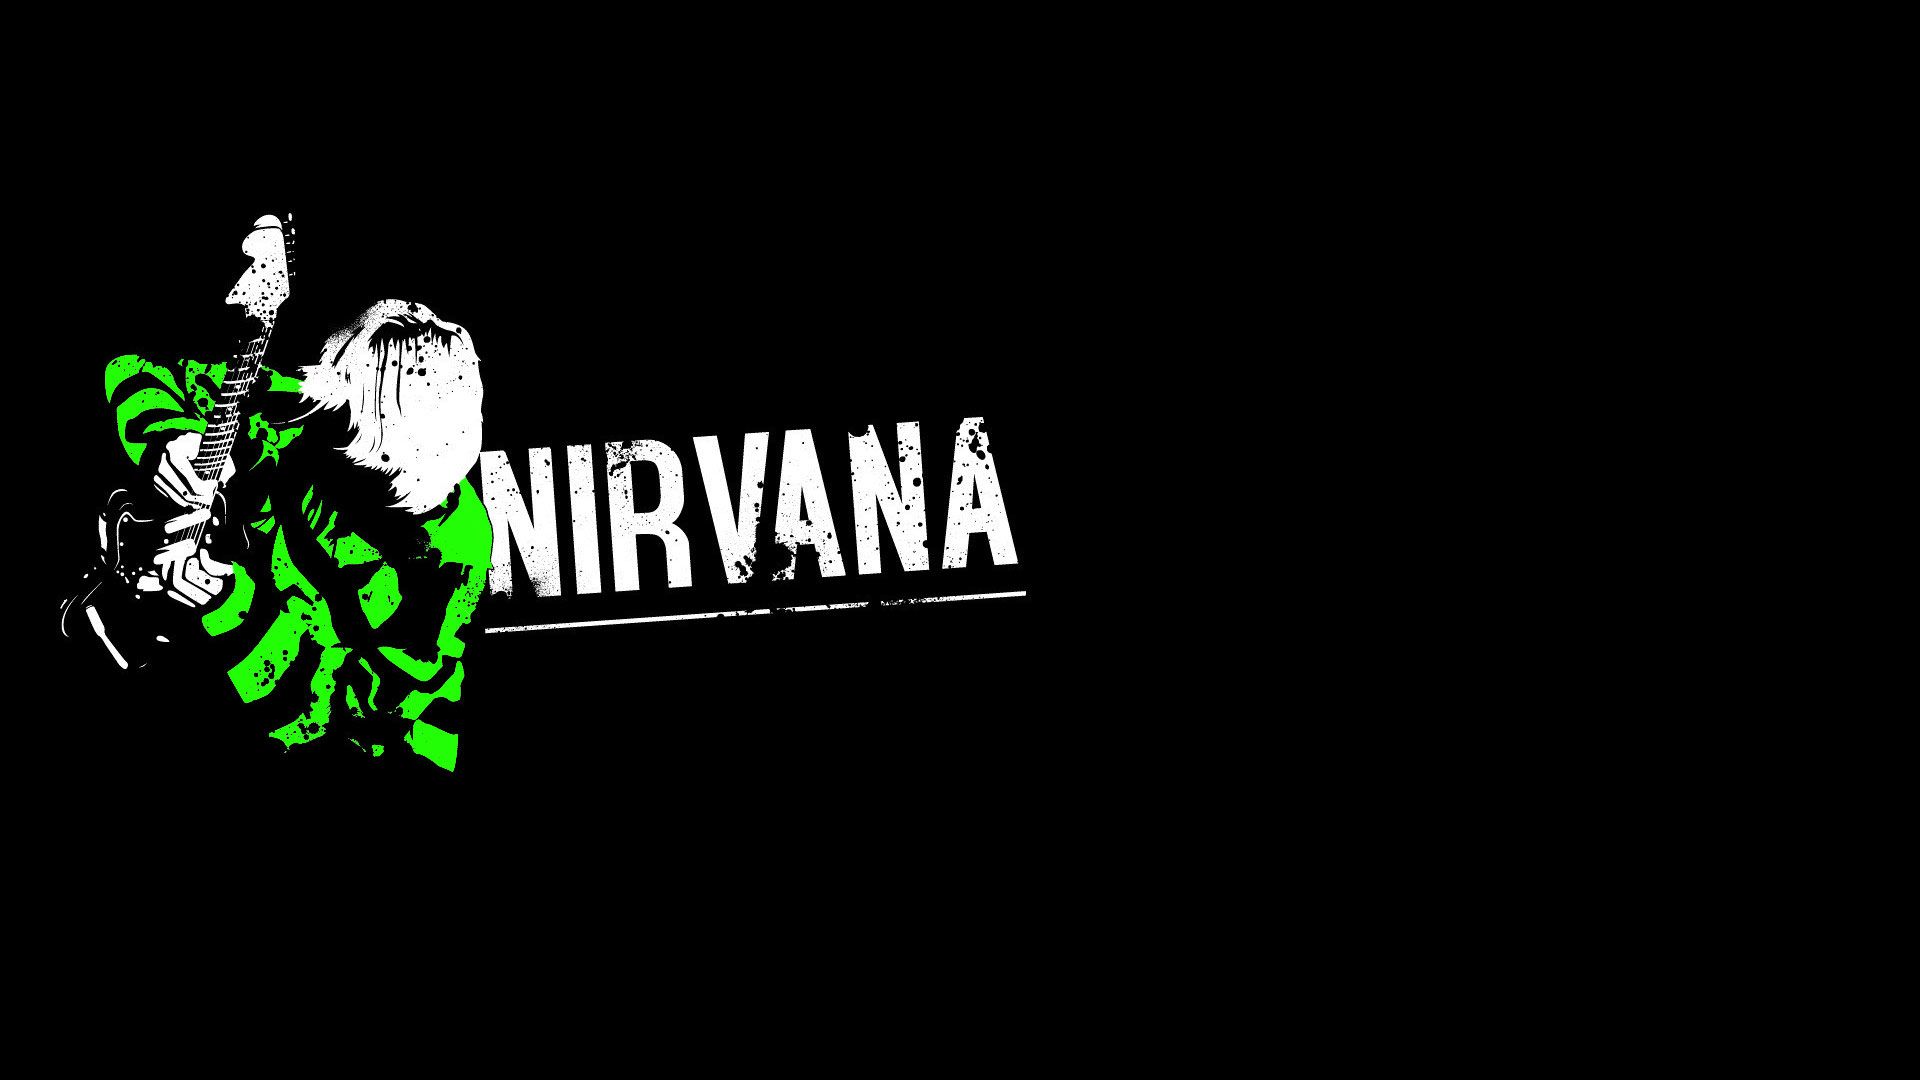 Nirvana Background. Nirvana Wallpaper, Nirvana Bleach Wallpaper And Nirvana Smiley Face Wallpaper